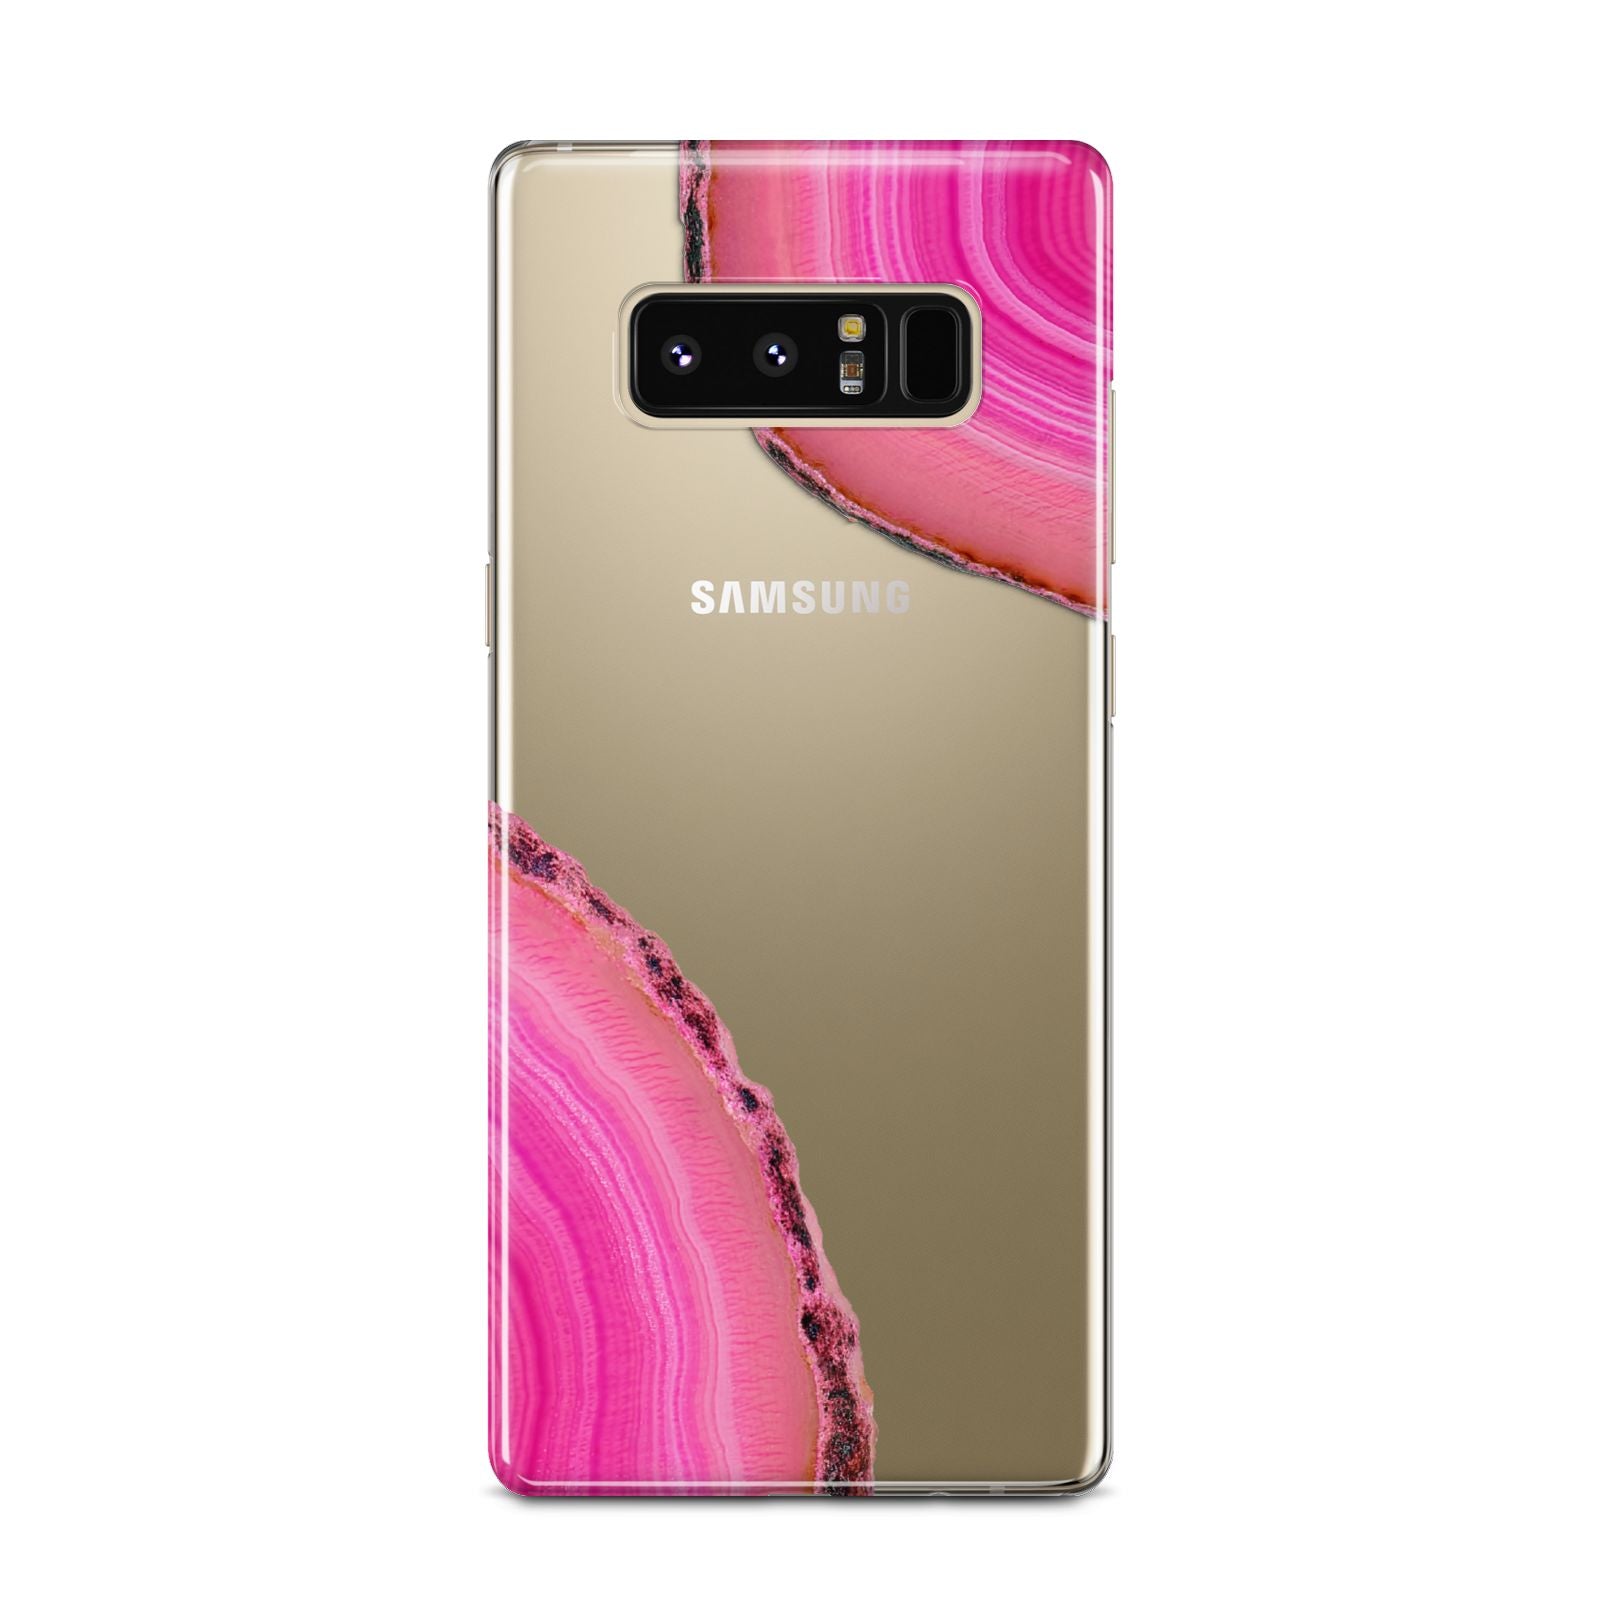 Agate Bright Pink Samsung Galaxy Note 8 Case